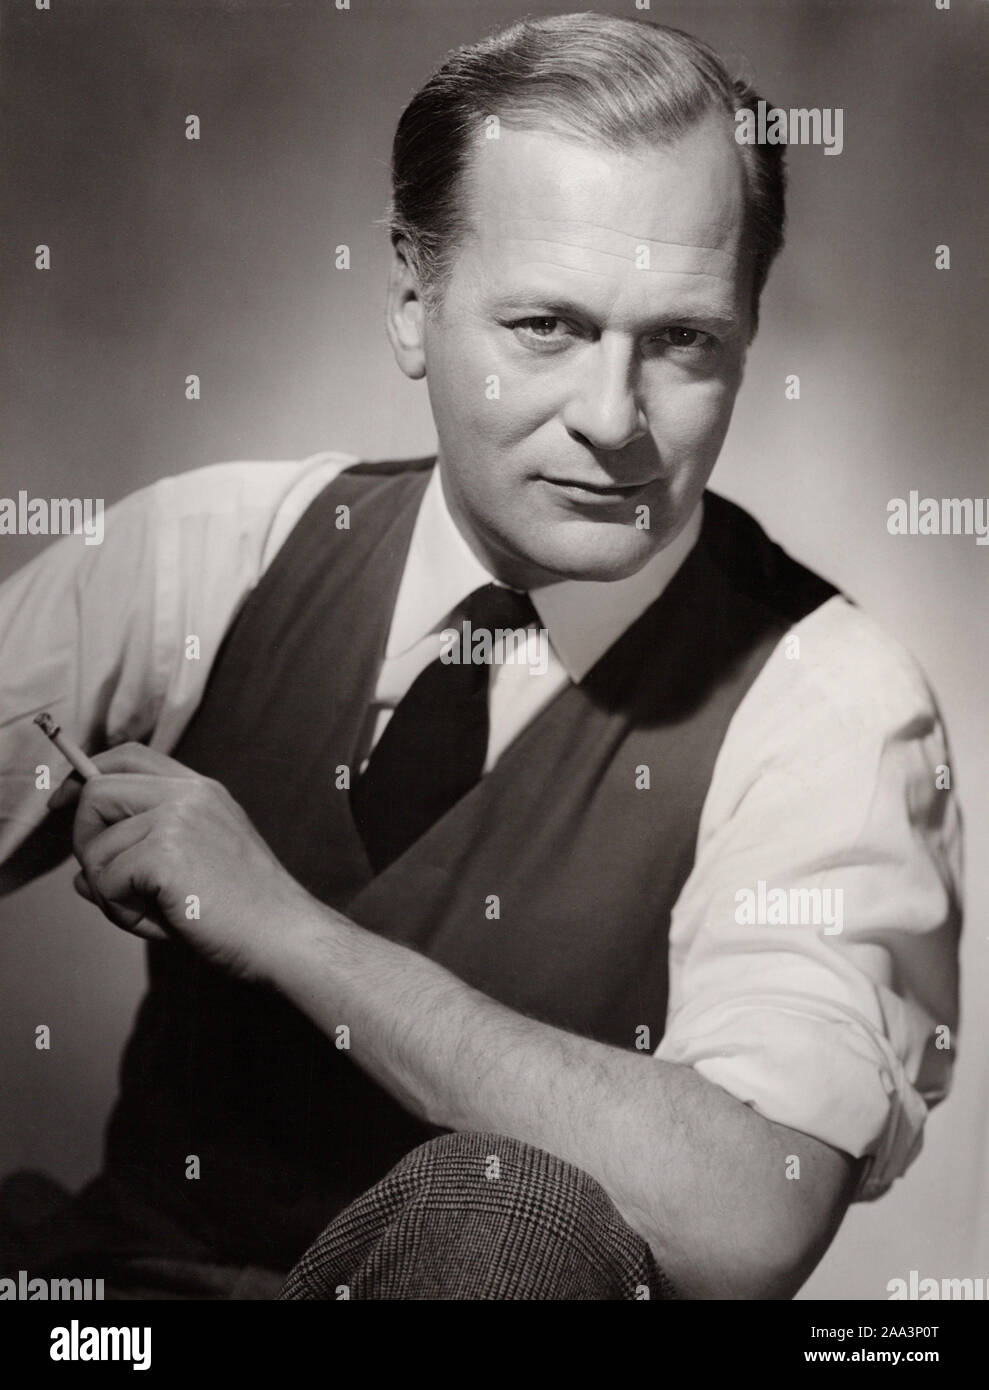 Curd Jürgens, deutscher Bühnen- und Deutschland, Filmschauspieler 1959. Acteur de cinéma et de théâtre allemand Curd Juergens, Allemagne 1959. Banque D'Images